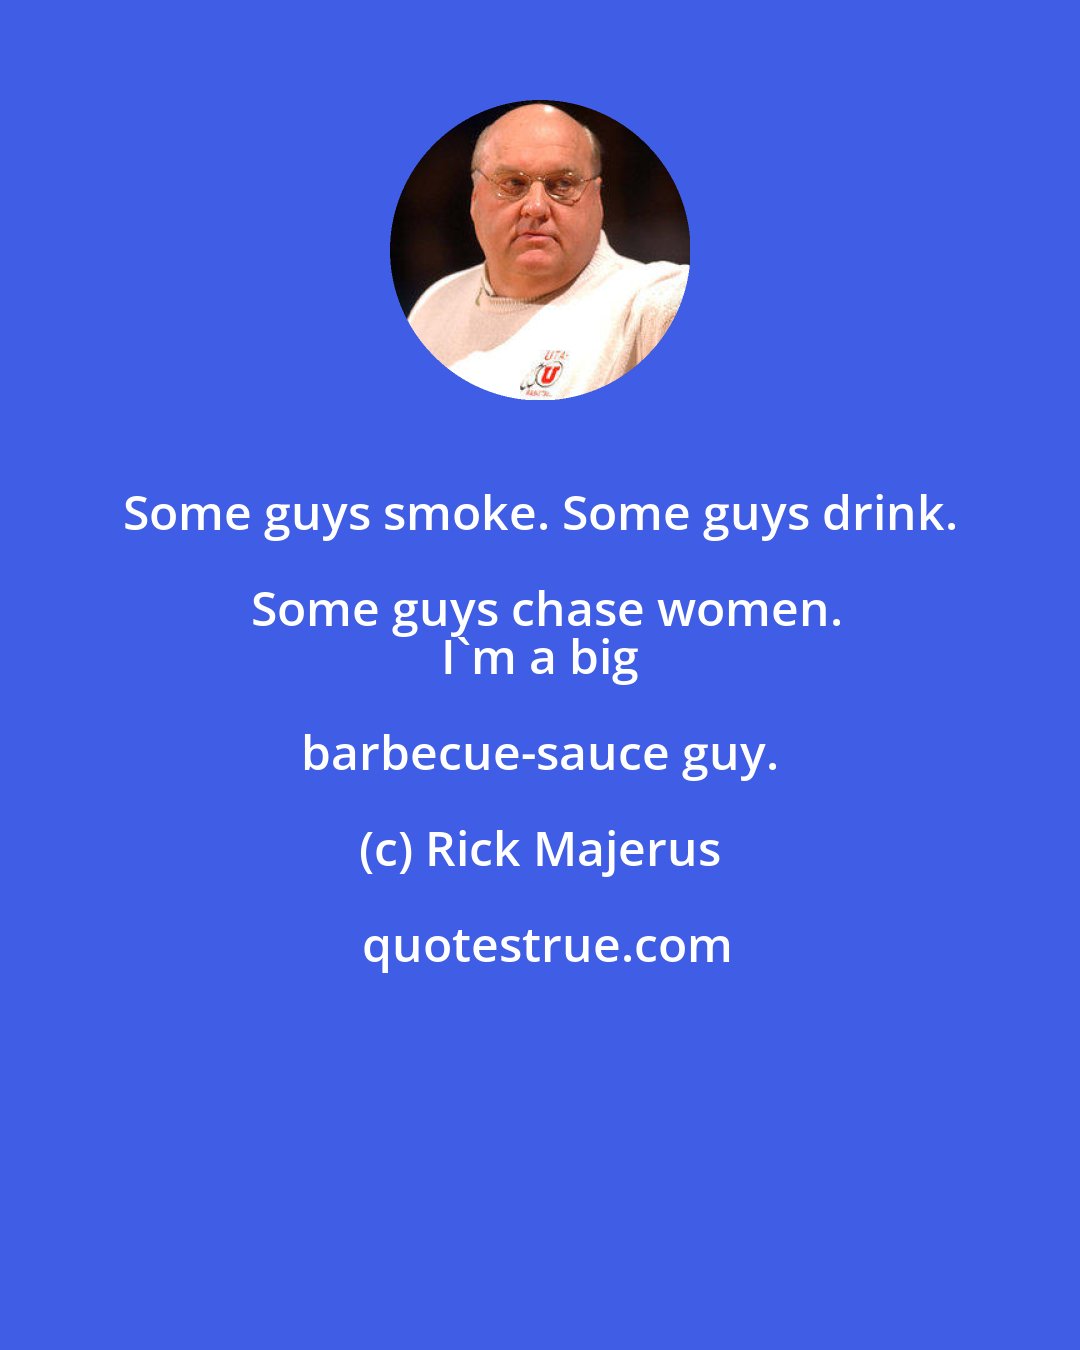 Rick Majerus: Some guys smoke. Some guys drink. Some guys chase women.
 I'm a big barbecue-sauce guy.